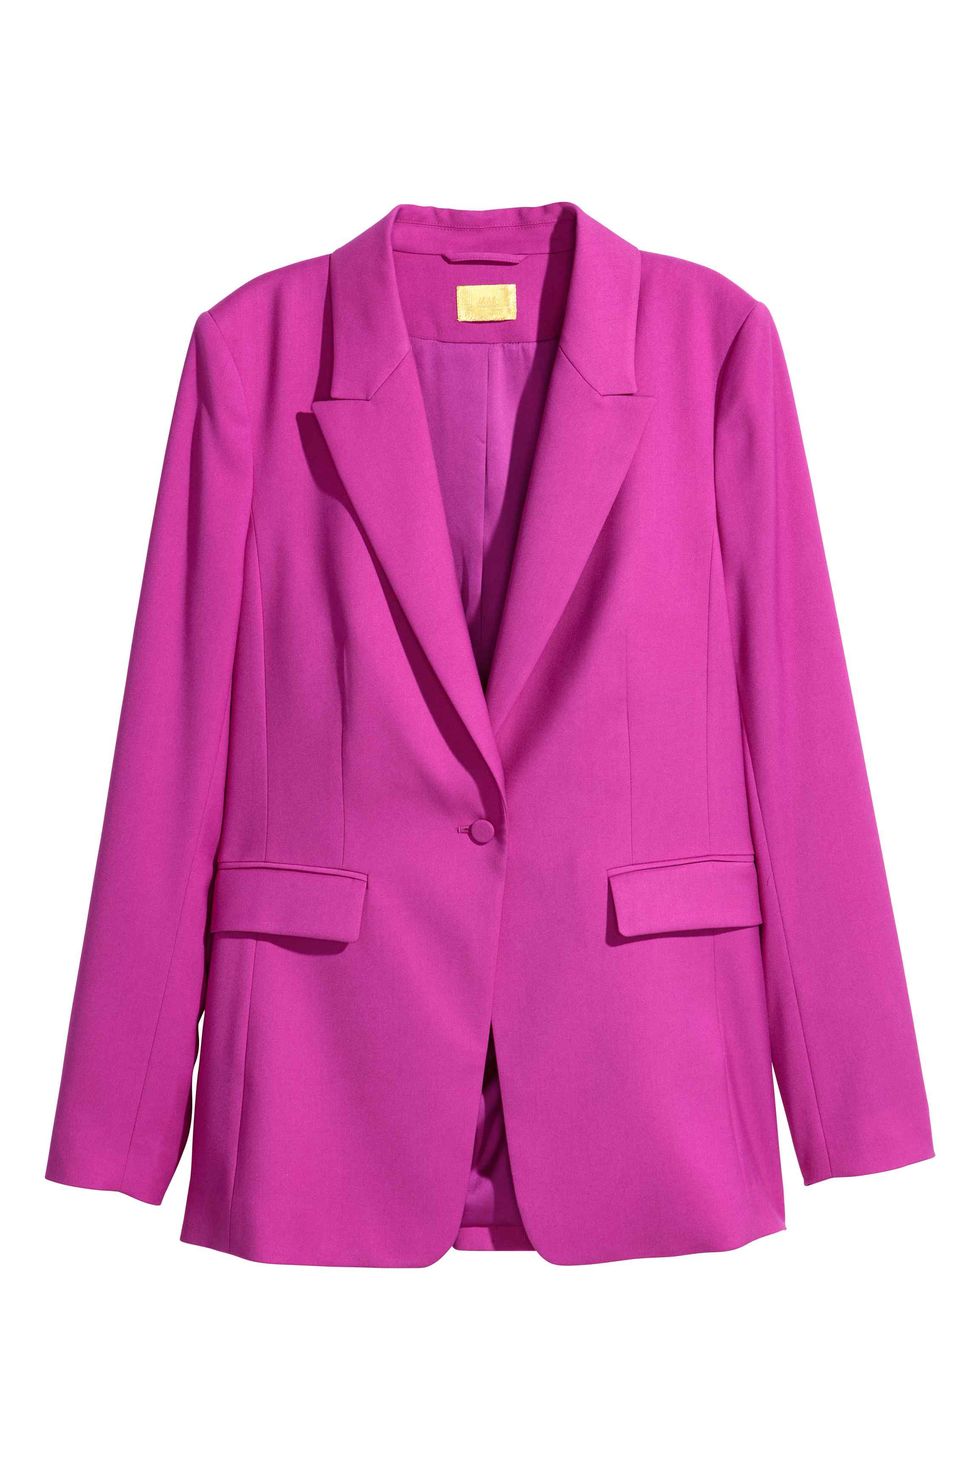 Clothing, Outerwear, Blazer, Jacket, Pink, Magenta, Sleeve, Purple, Violet, Suit, 